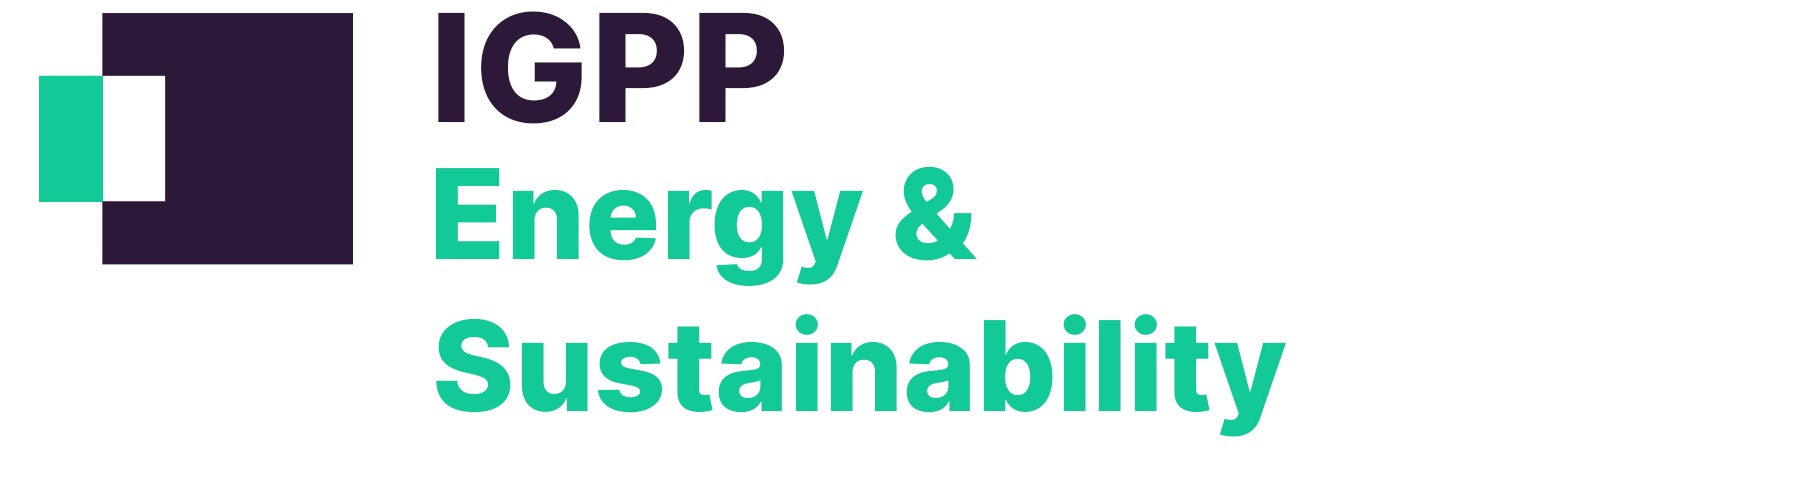 IGPP Construction and Build Environment sub brand logo